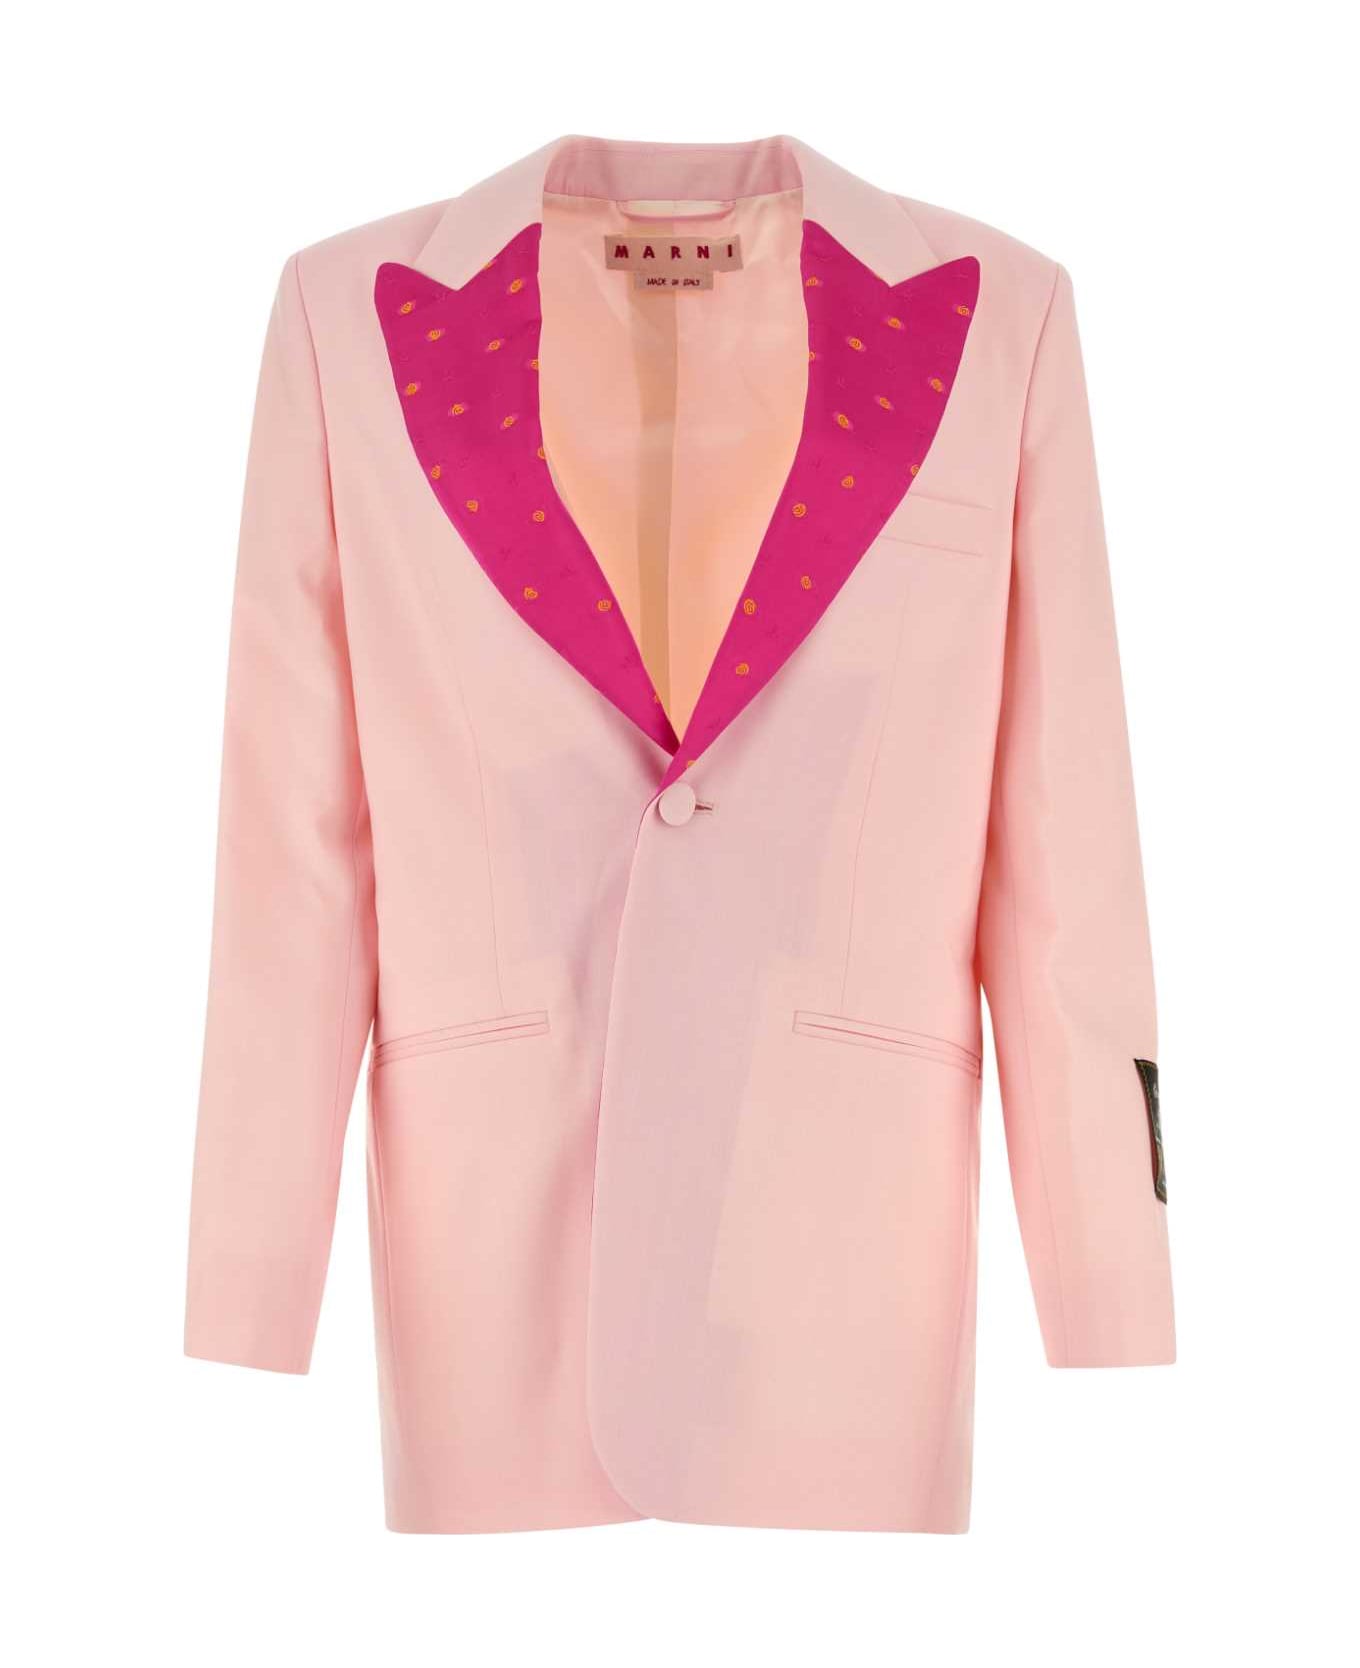 Marni Light Pink Wool Blazer - ROSEPOWDER